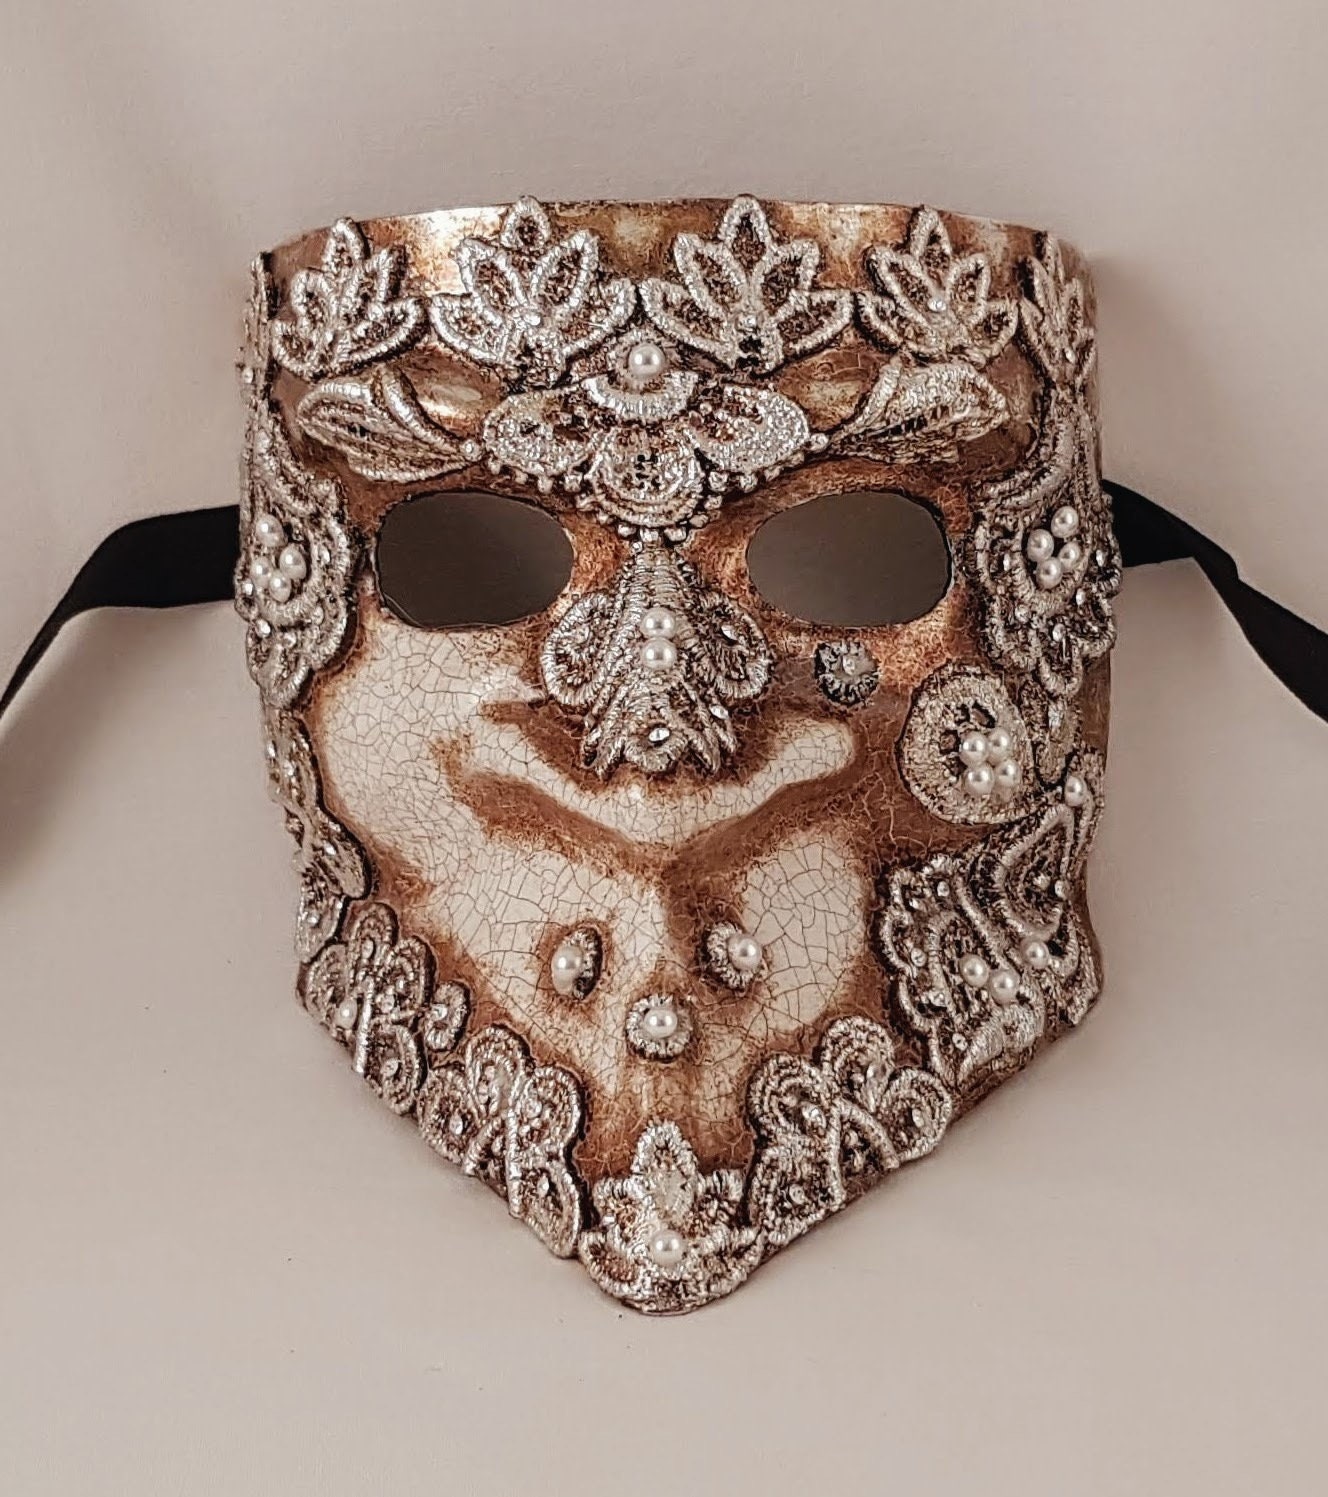 Bauta Fancy White and Silver Venetian Stick Mask